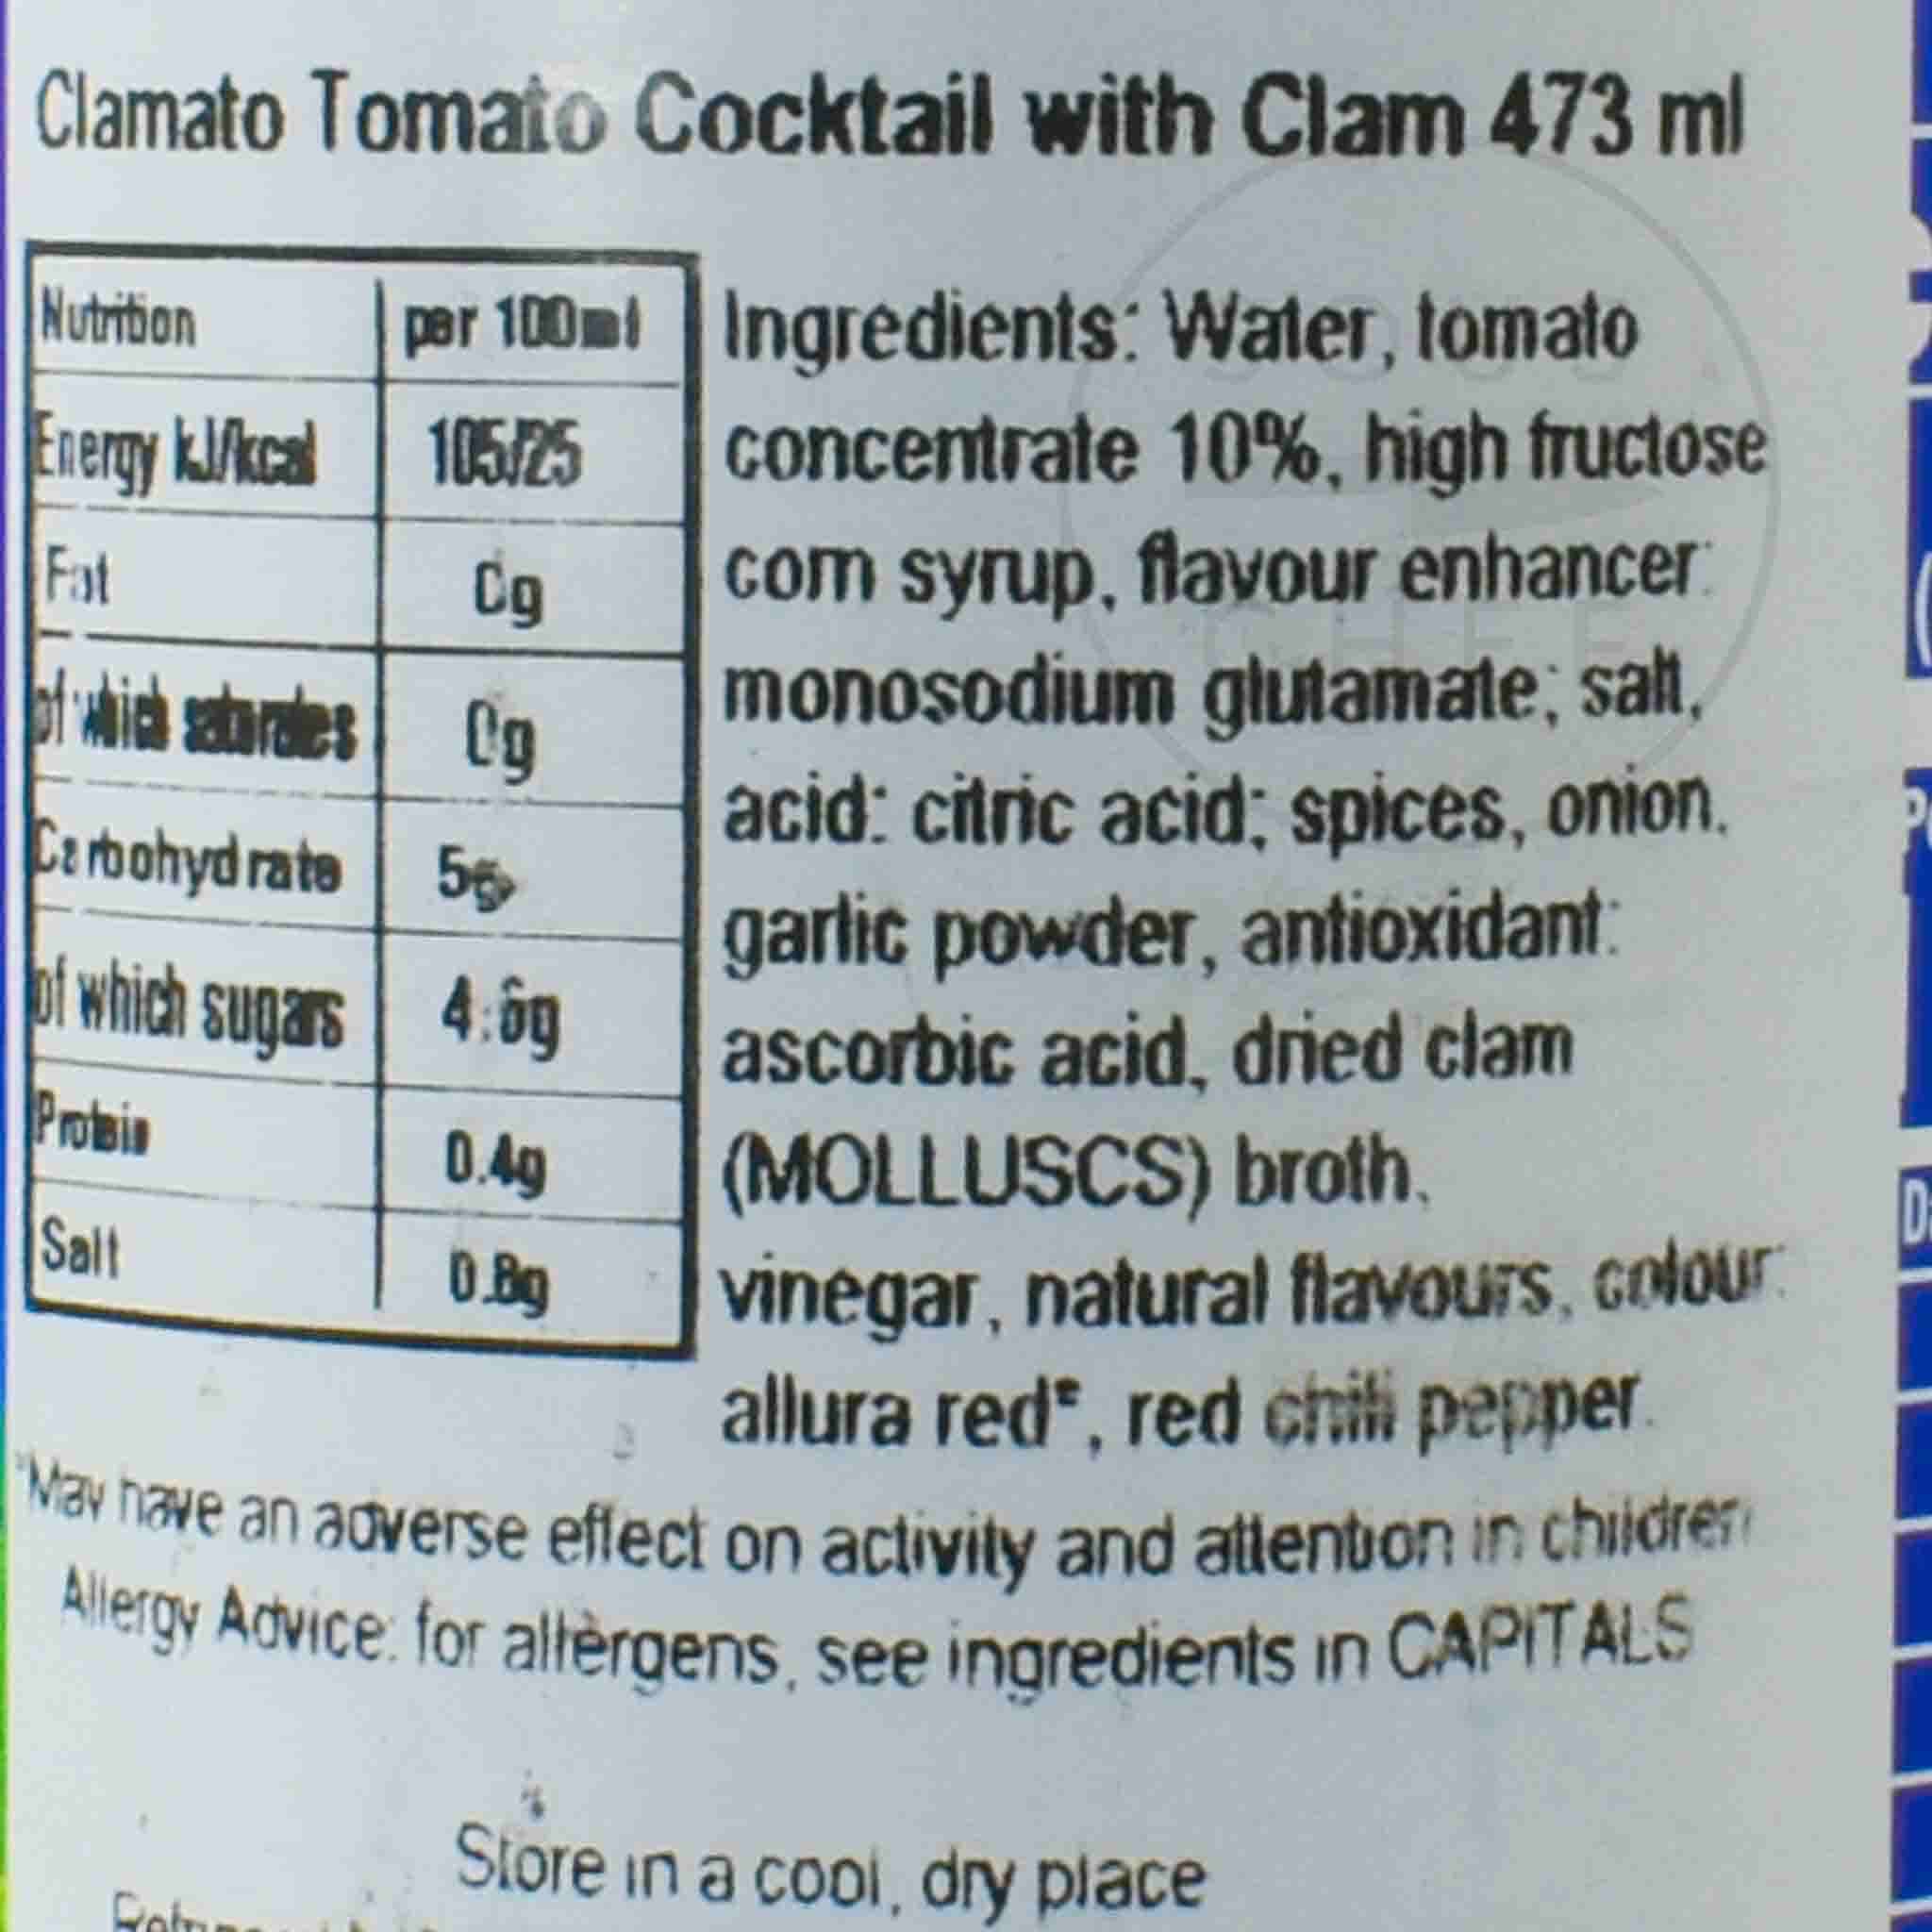 Clamato Tomato Cocktail Glass Bottle